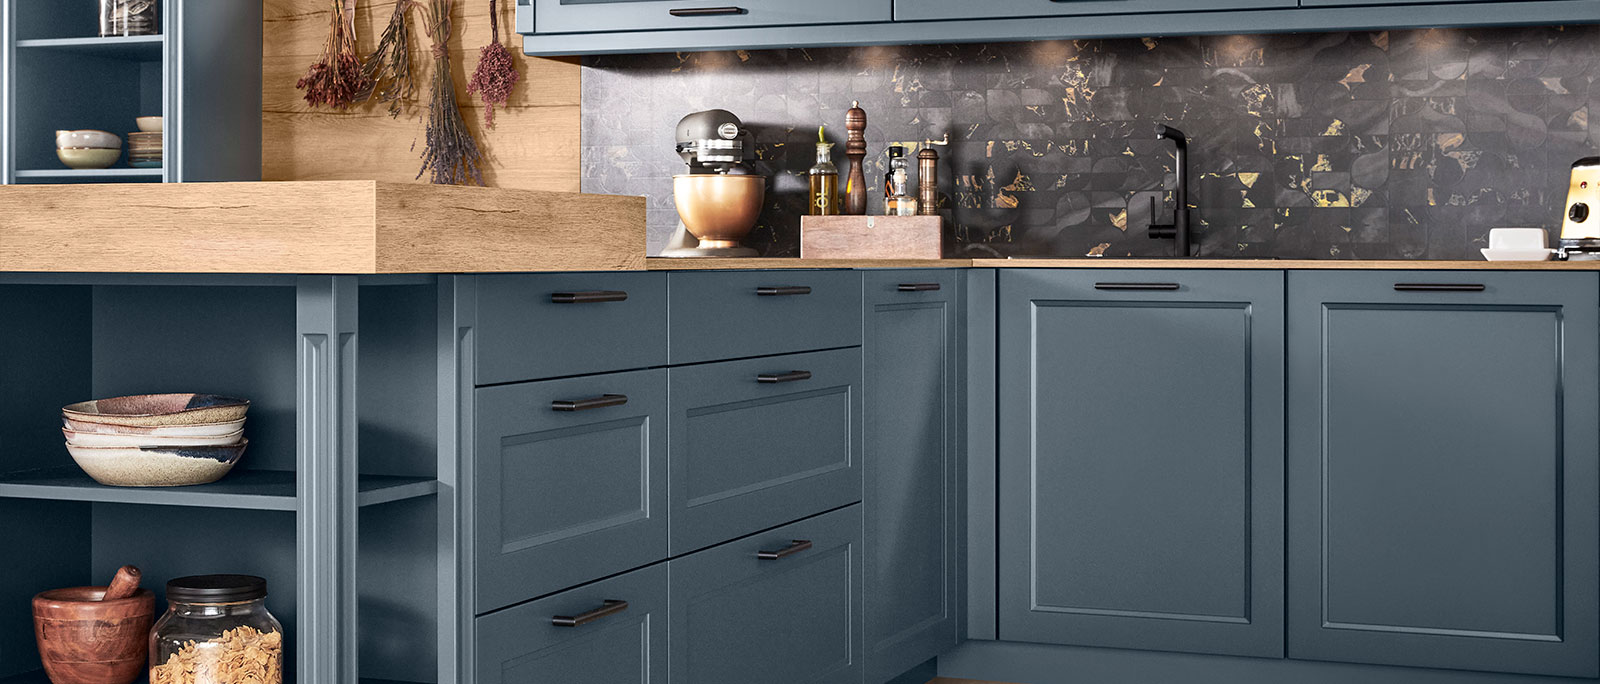 Latest Trends in Modular Kitchen Cabinet Designs